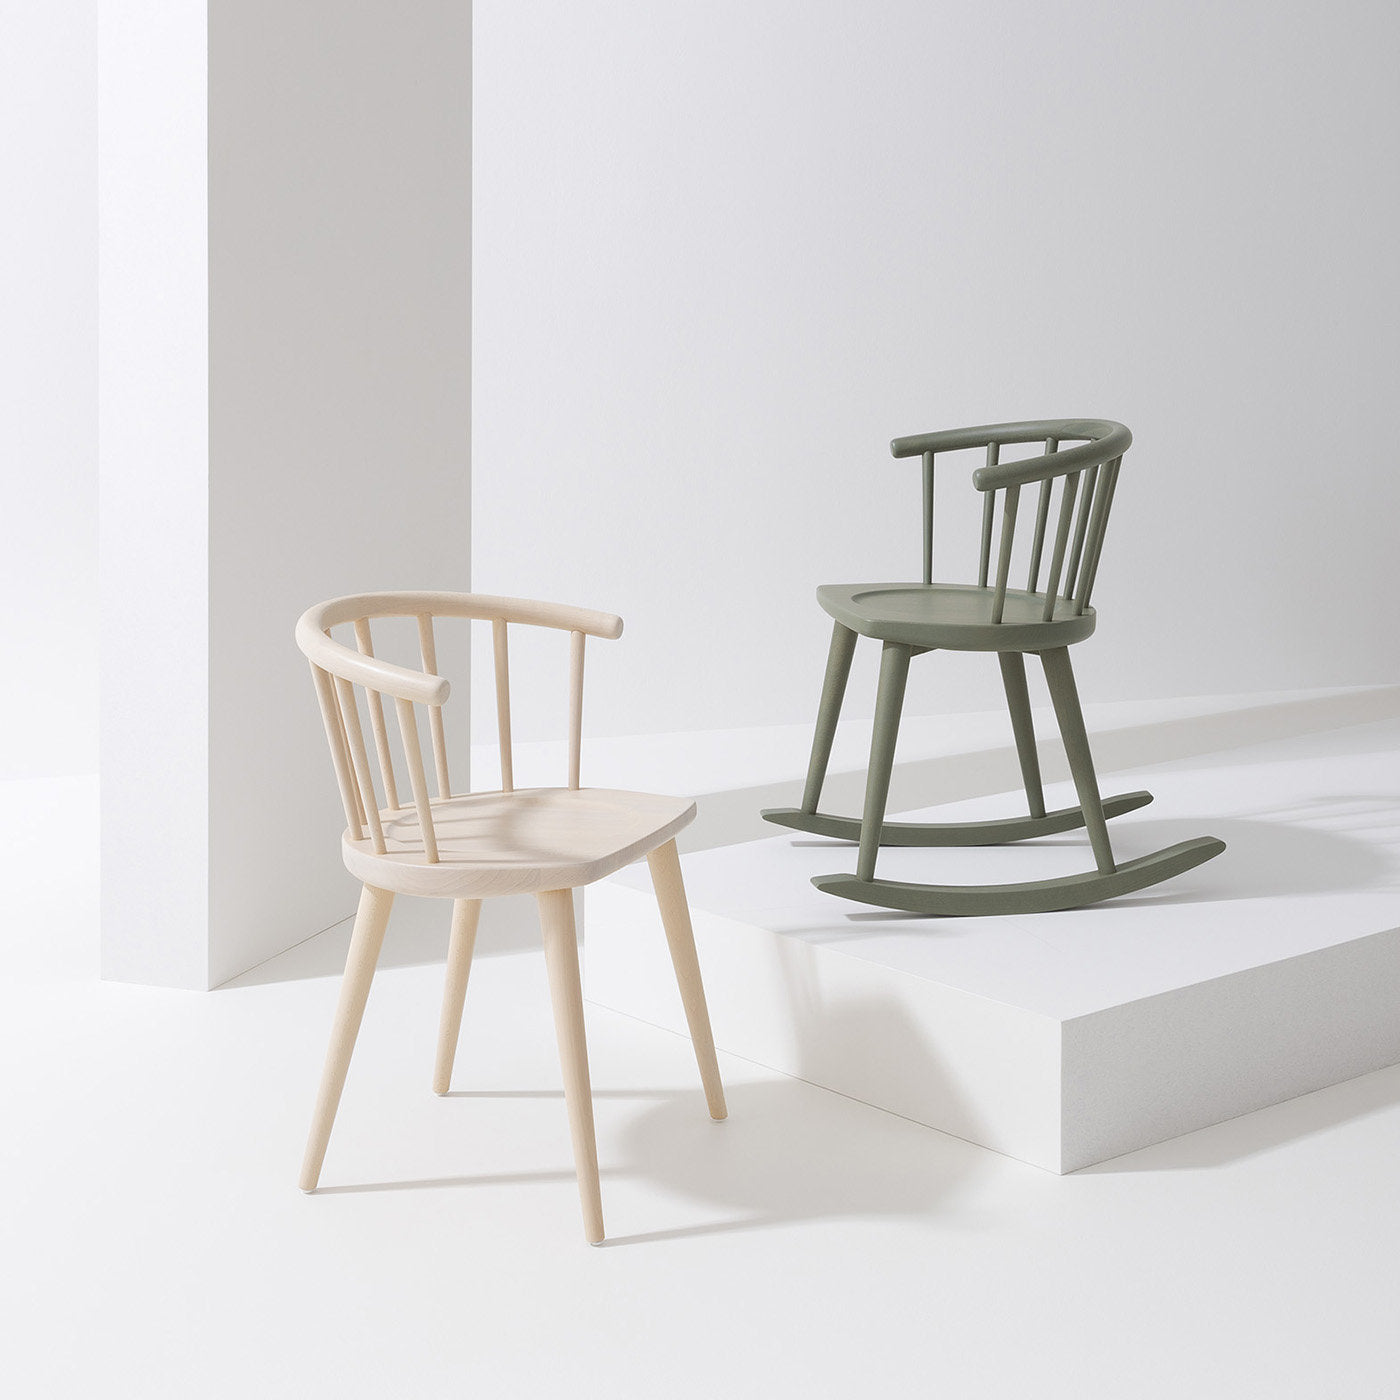 W. 608 Gray Rocking Chair by Fabrizio Gallinaro - Alternative view 1